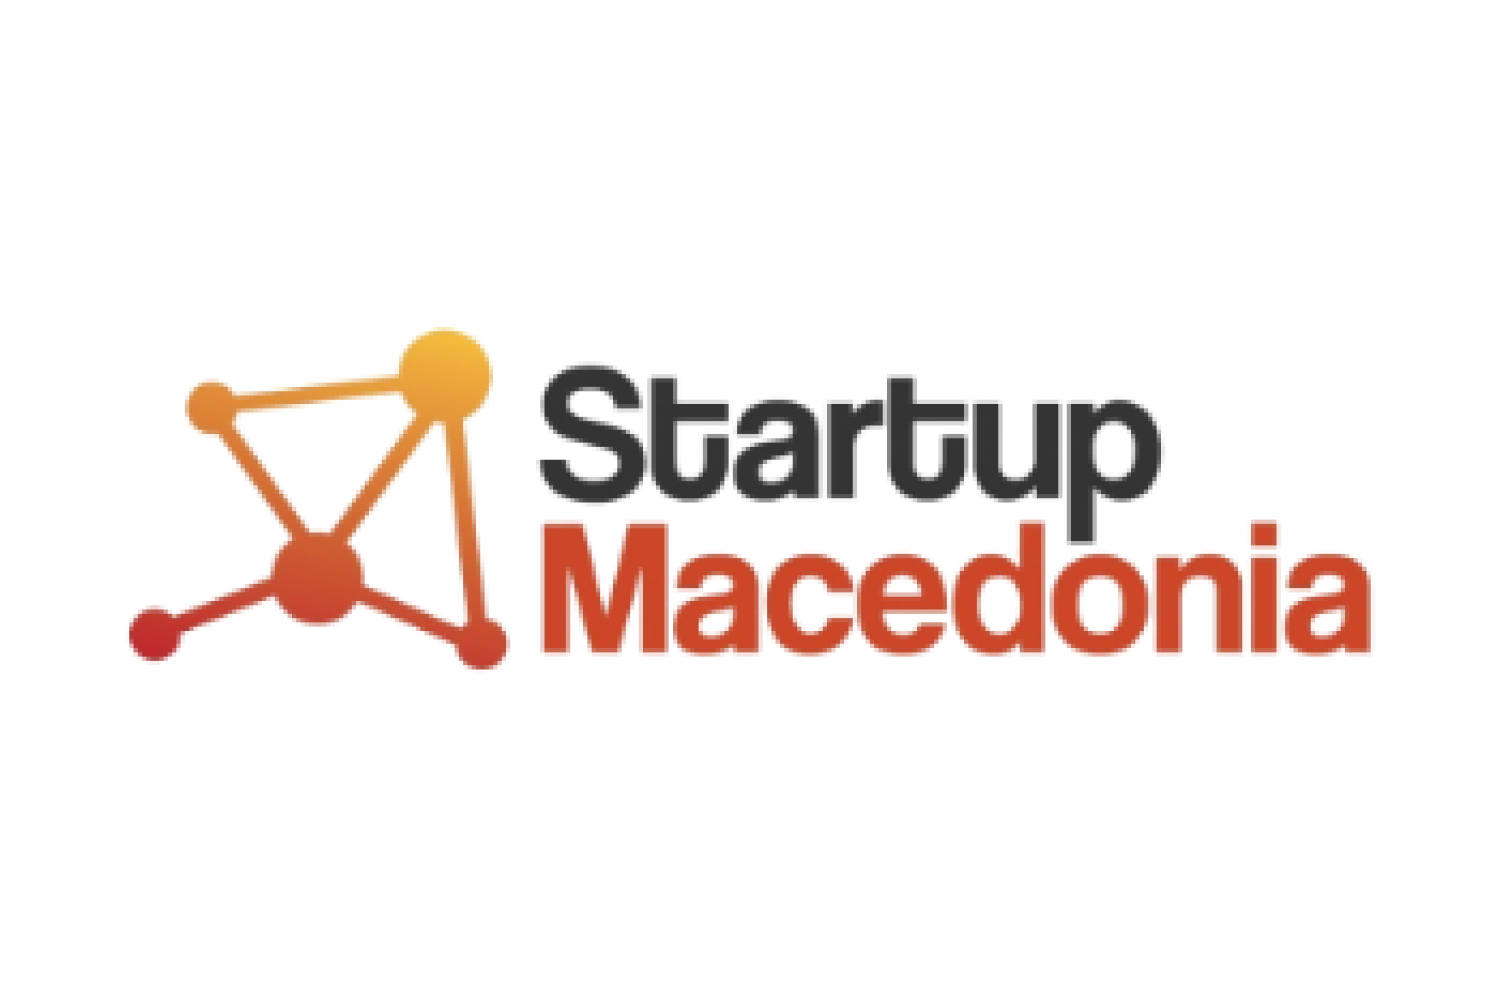 Startup Macedonia logo